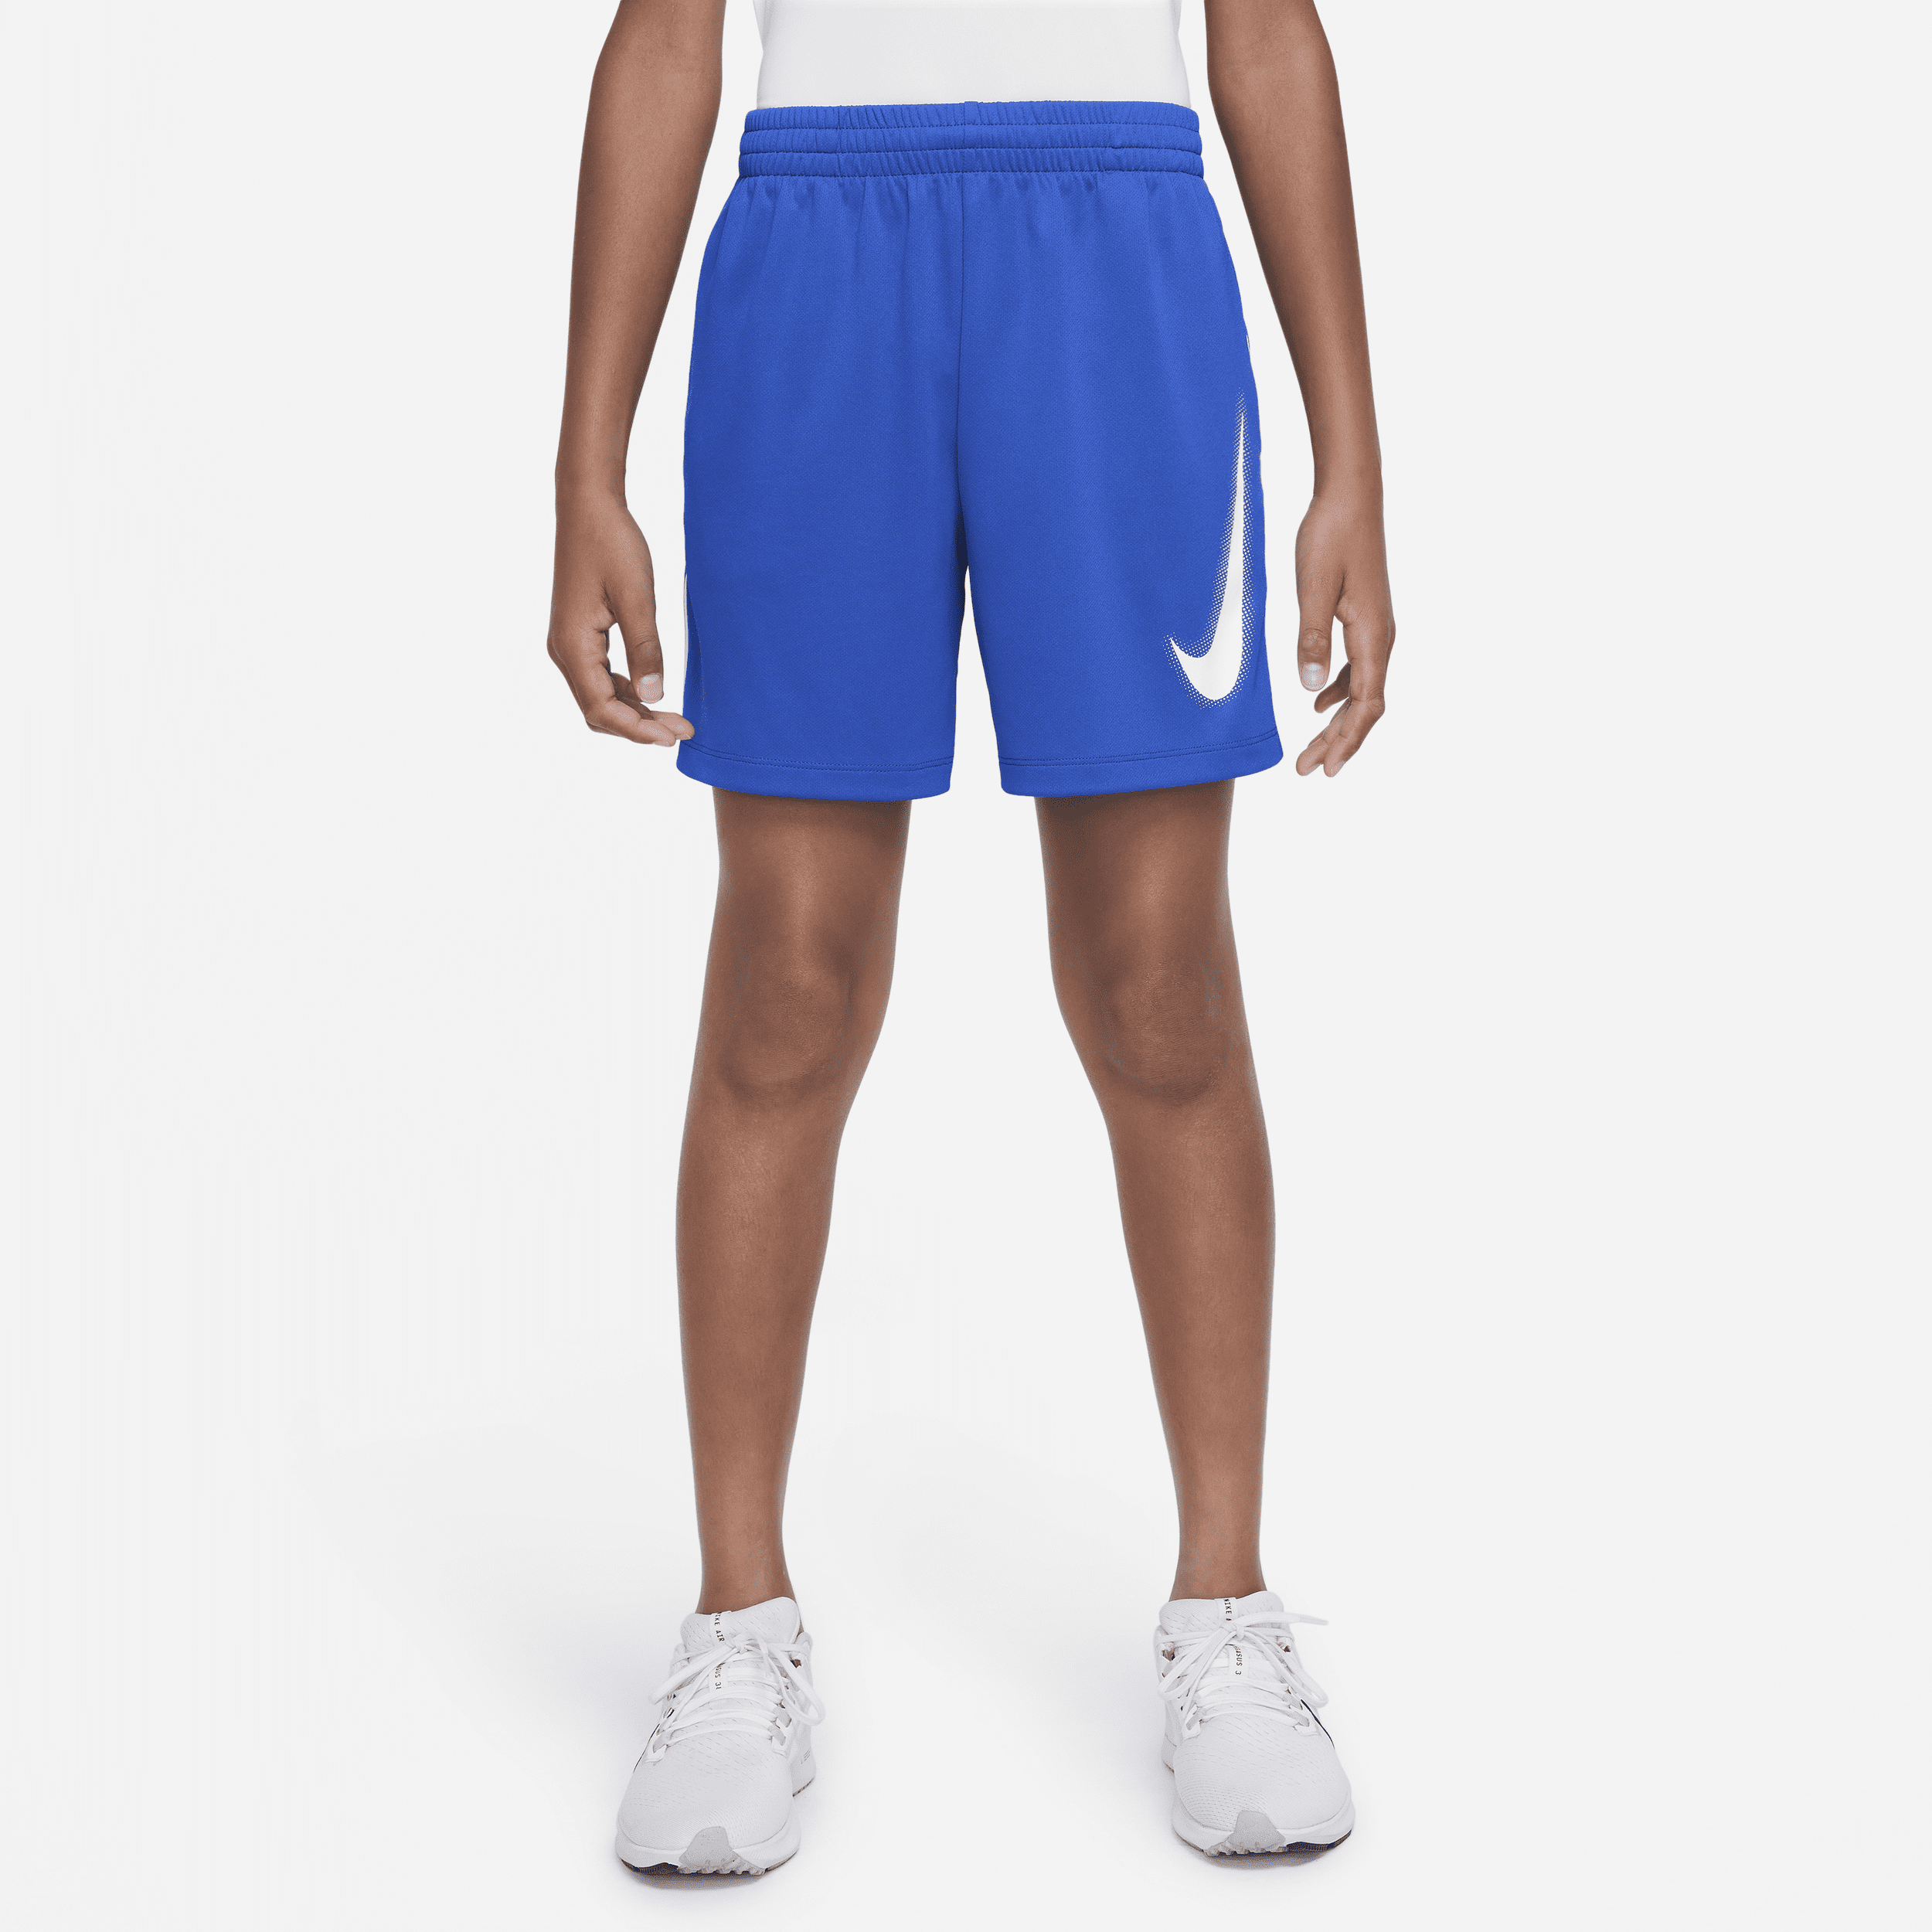 Nike Multi Dri-FIT trainingsshorts met graphic voor jongens - Blauw